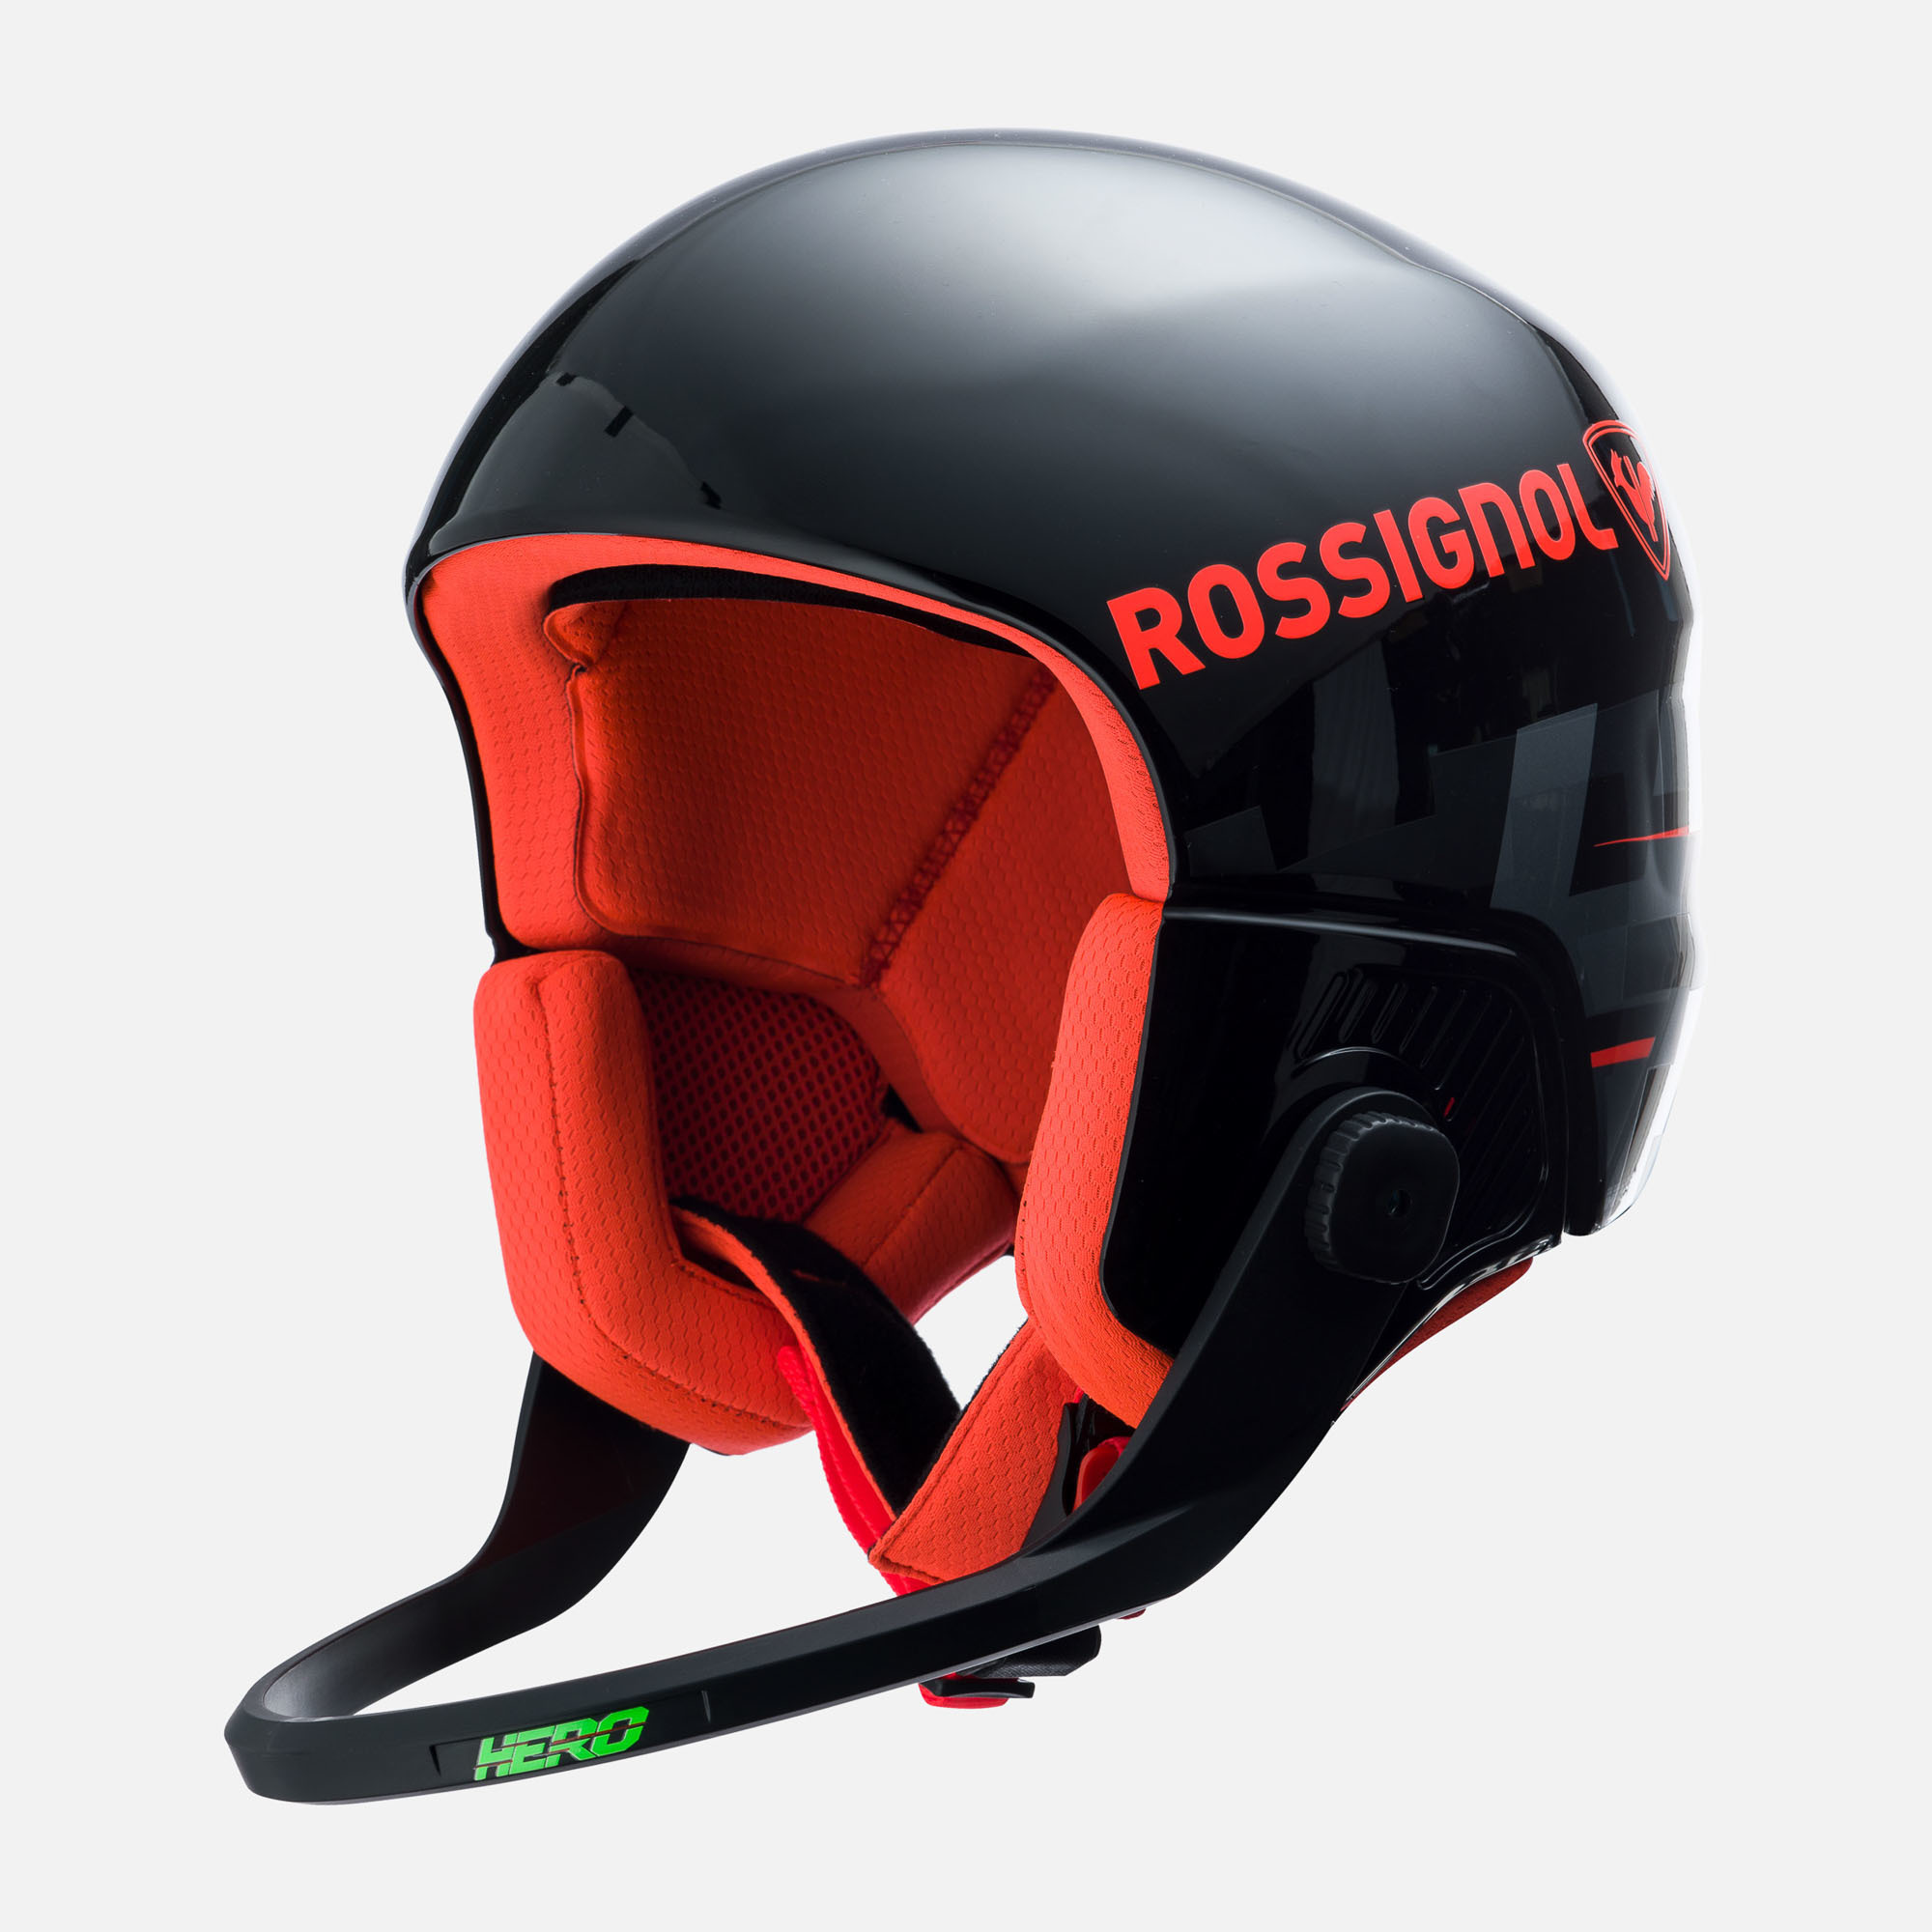 Womens Ski helmets, Snowboard helmets, with visor or goggles